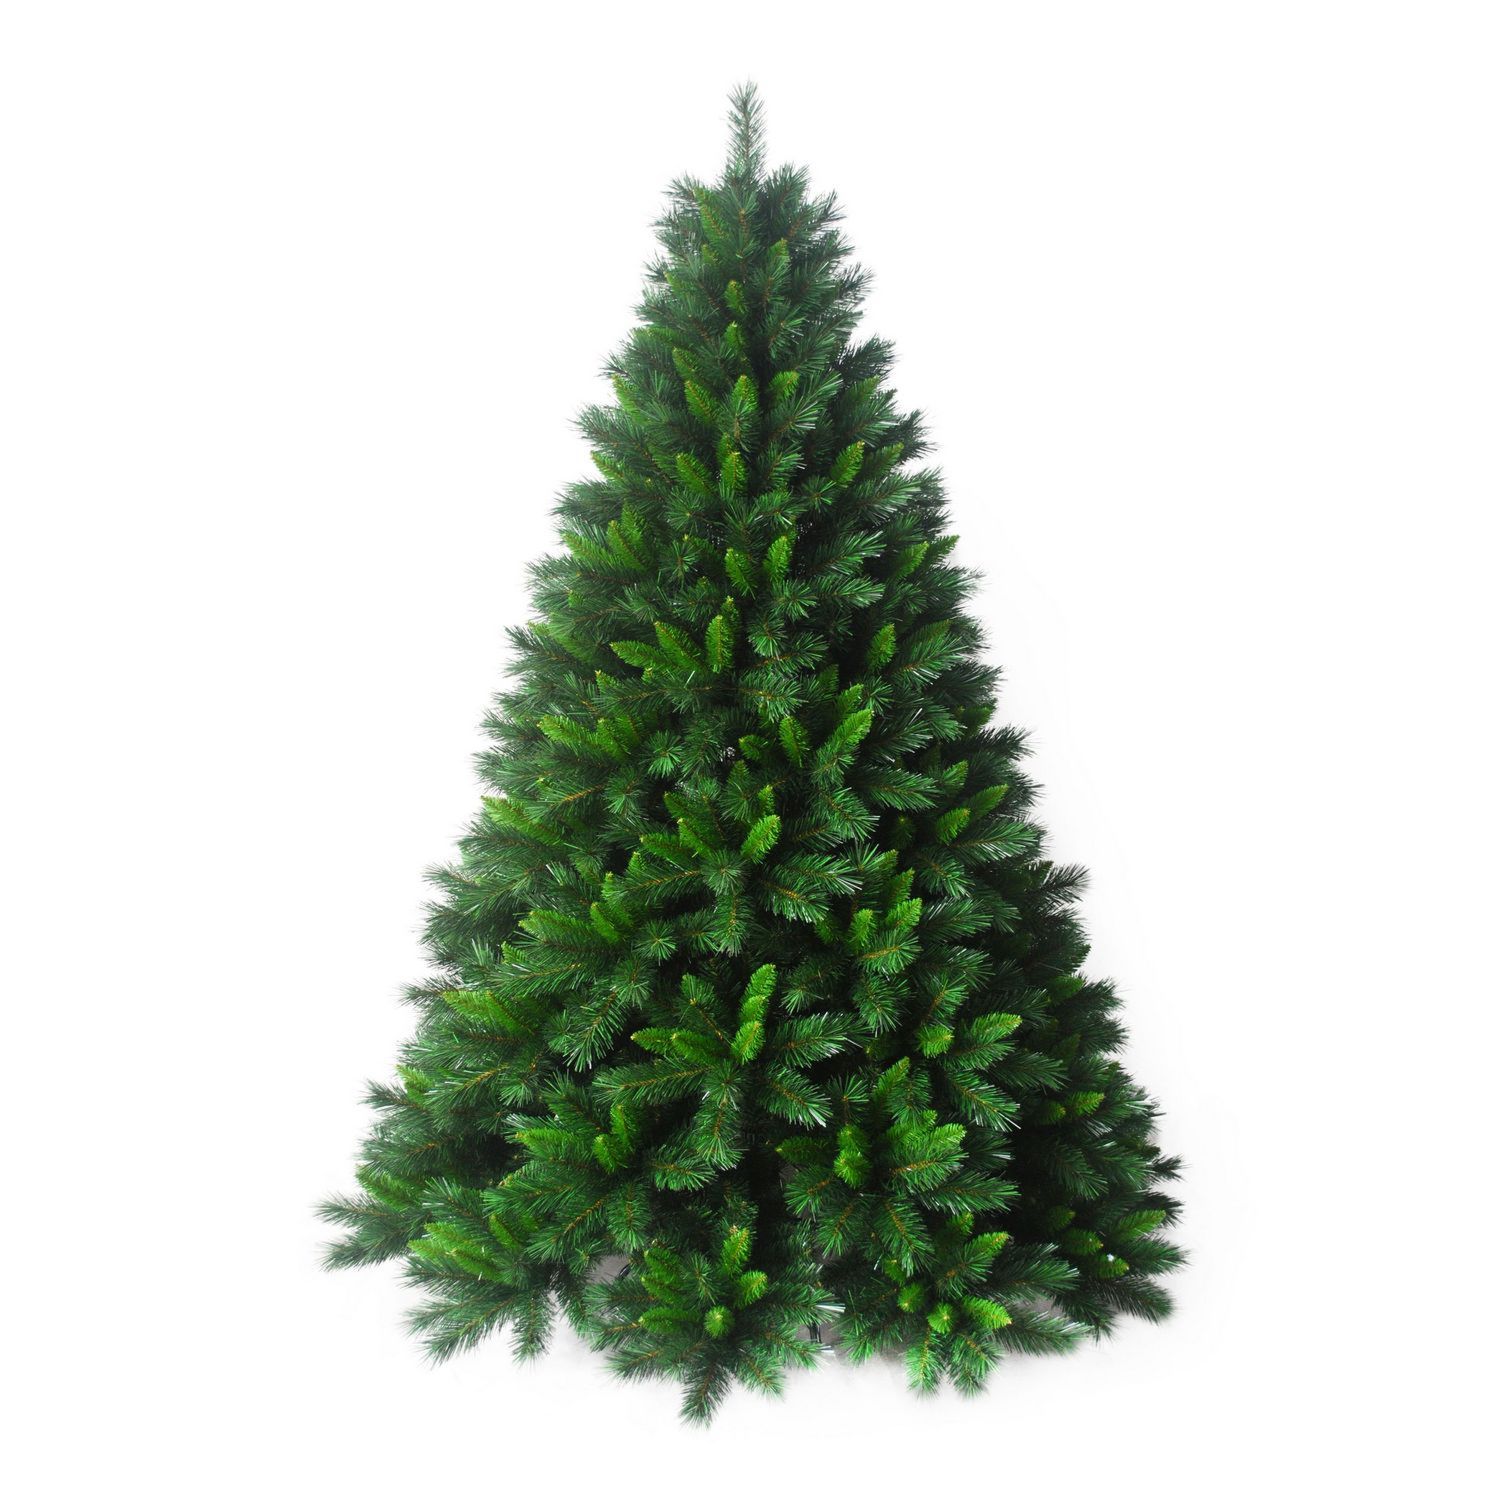 Newport Christmas Tree - Green / 6ft Image